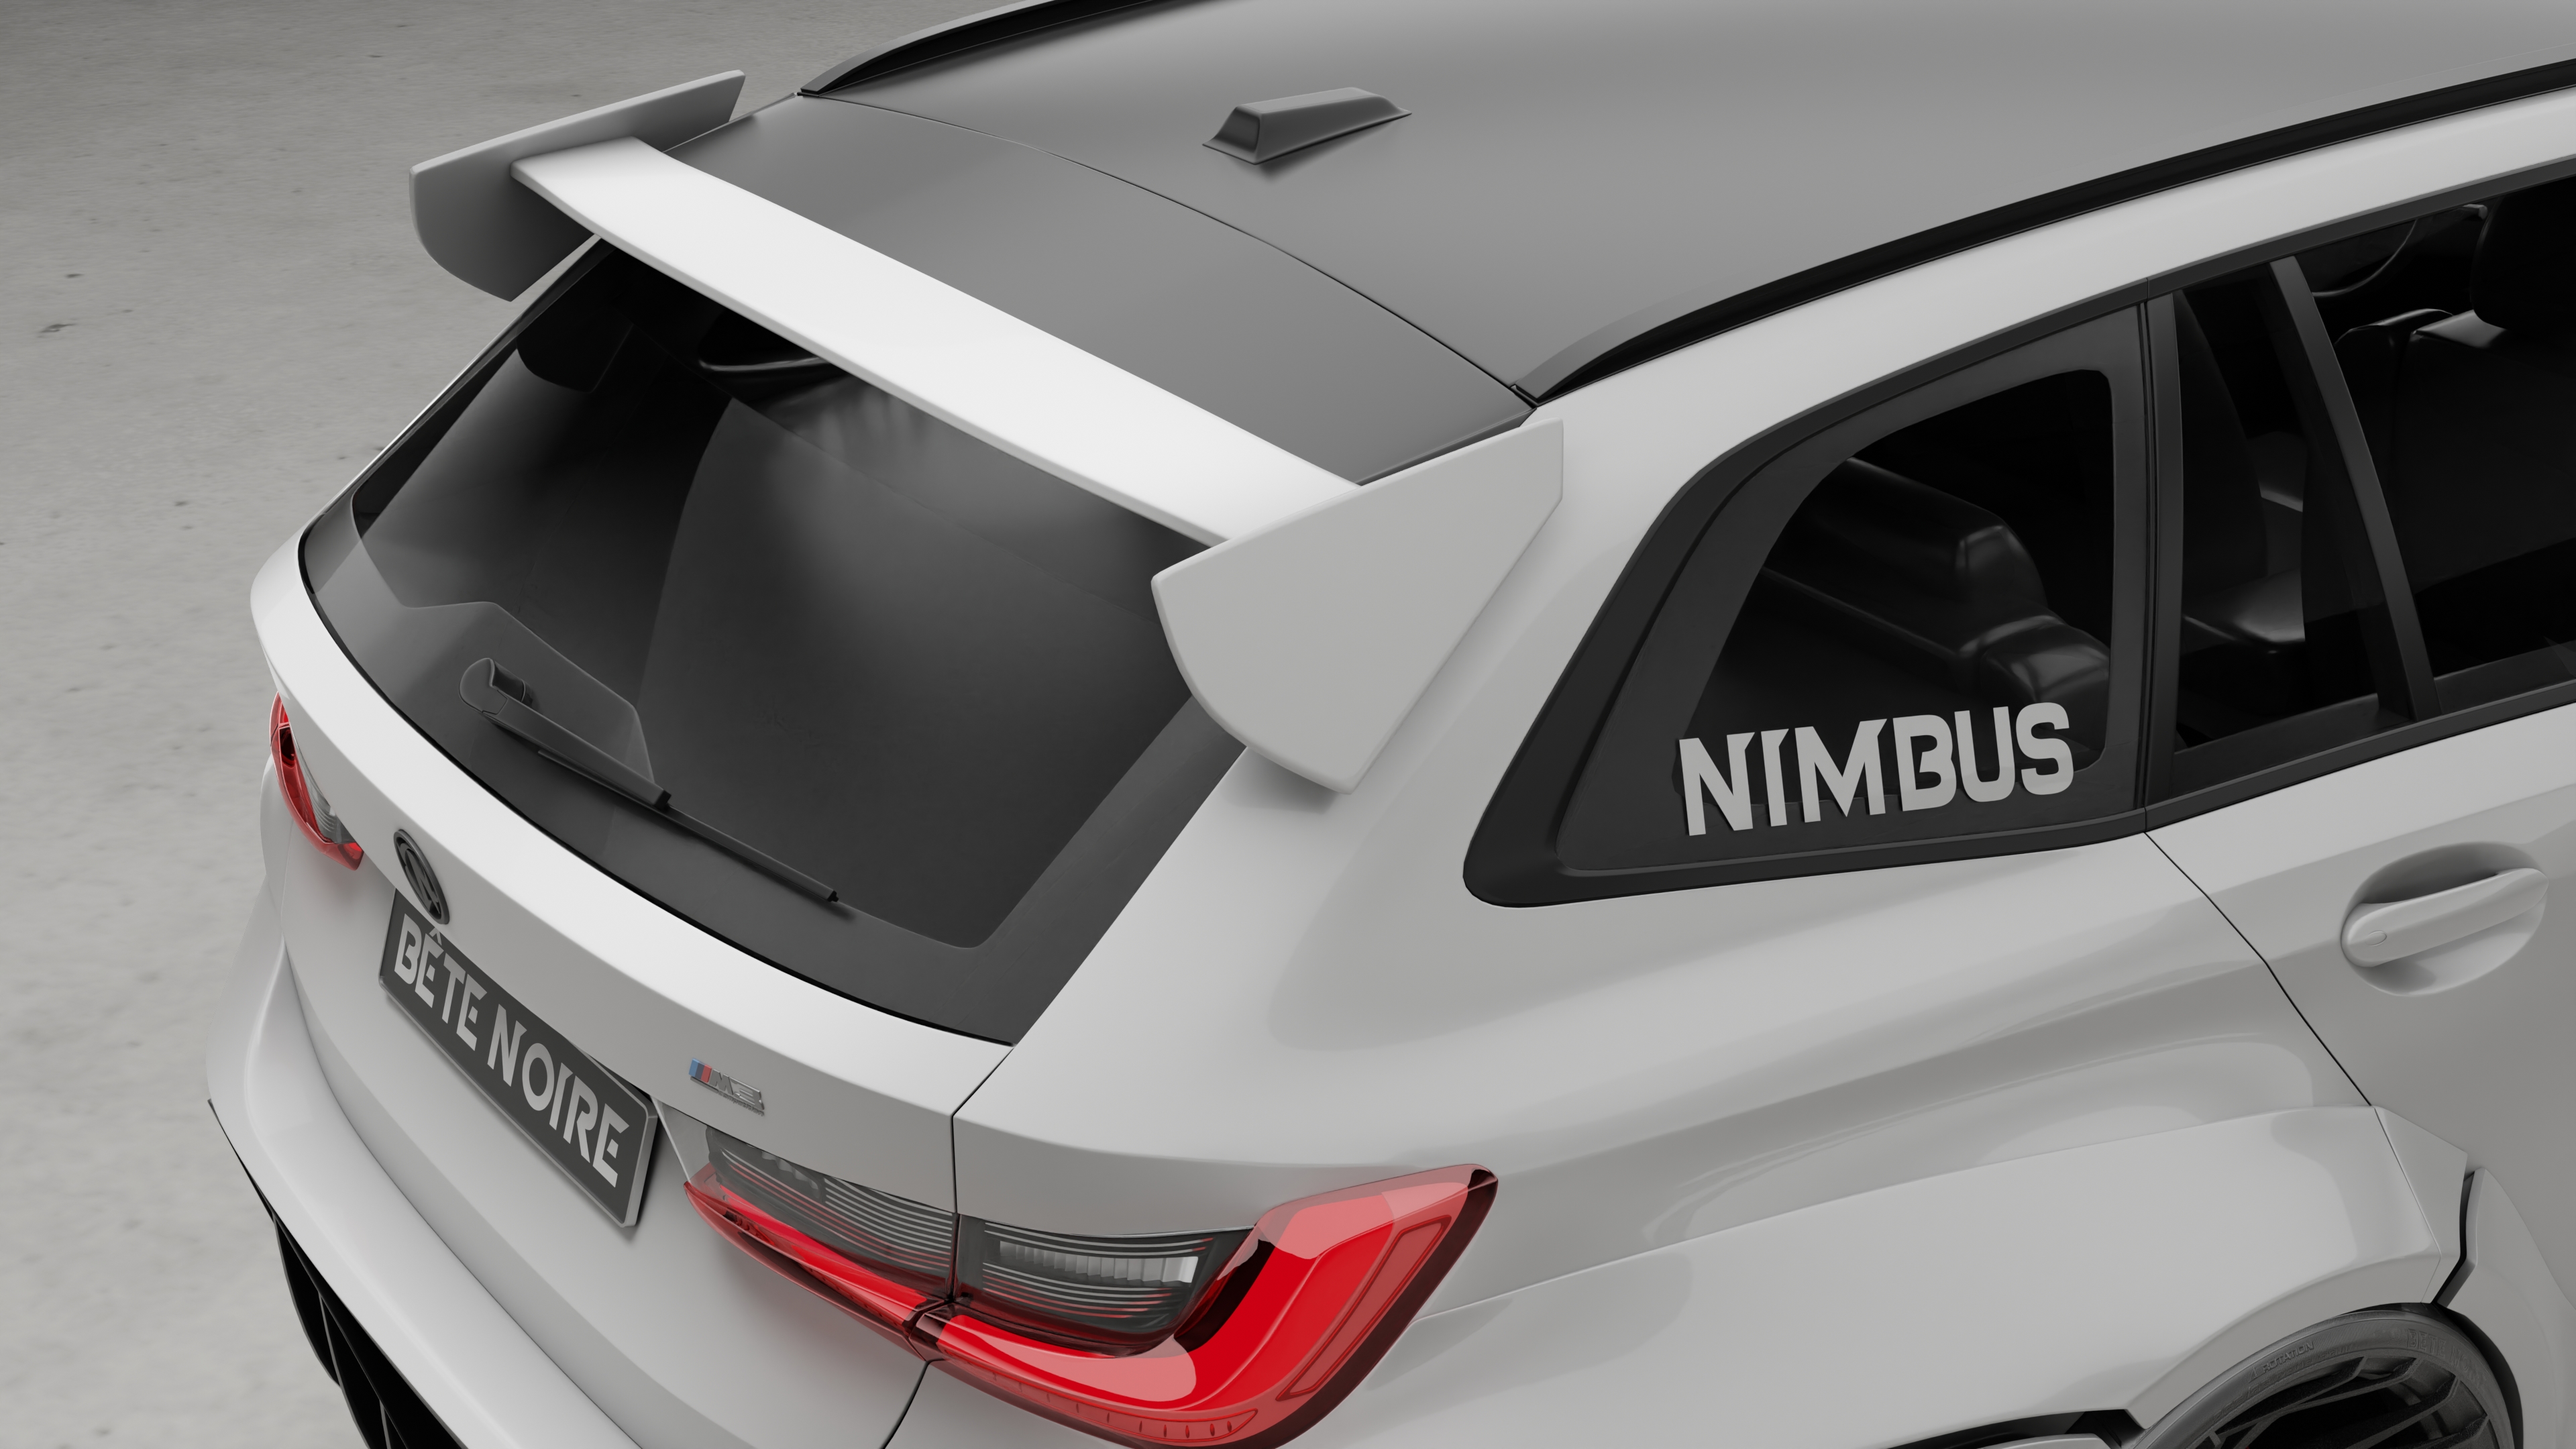 BMW М3 G81 Touring "Nimbus" Custom Wide Body Kit by Bête Noire